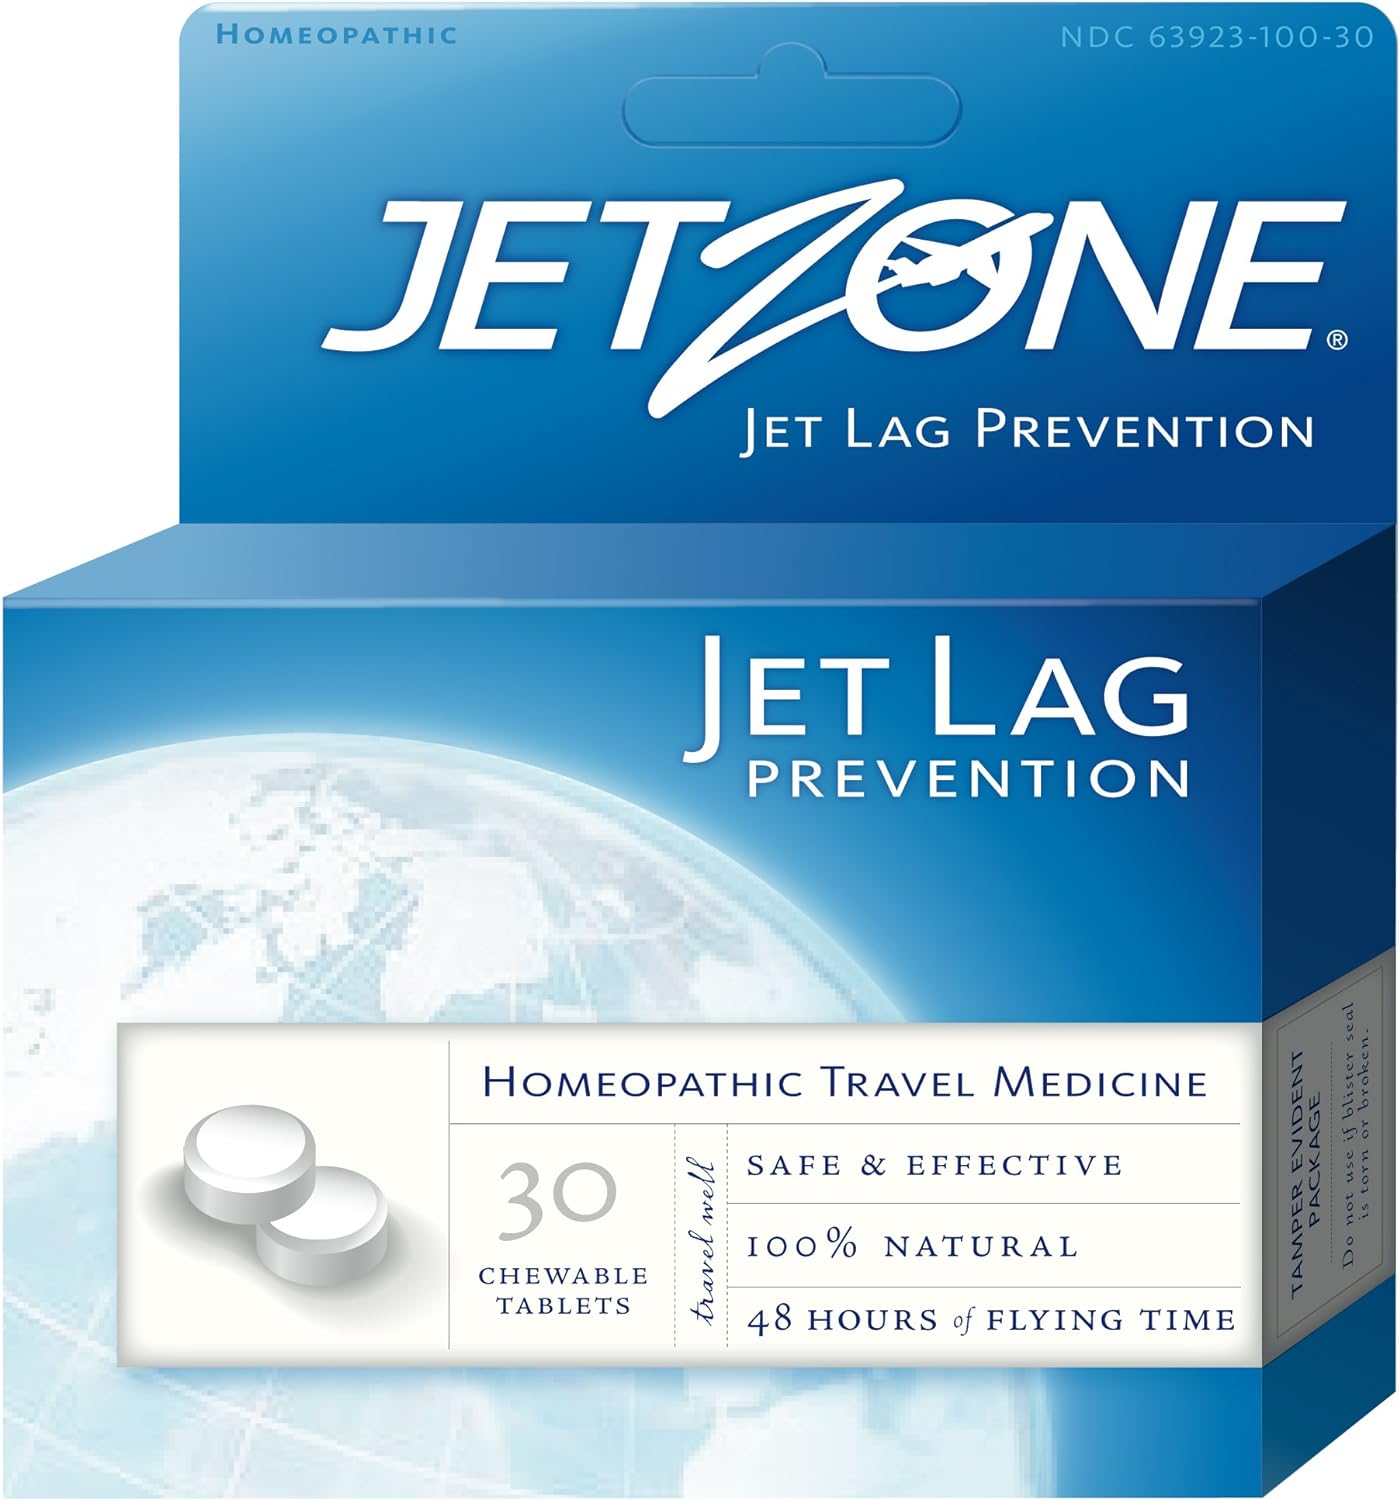 Jet Zone Jet Lag Prevention - Homeopathic Travel Medicine